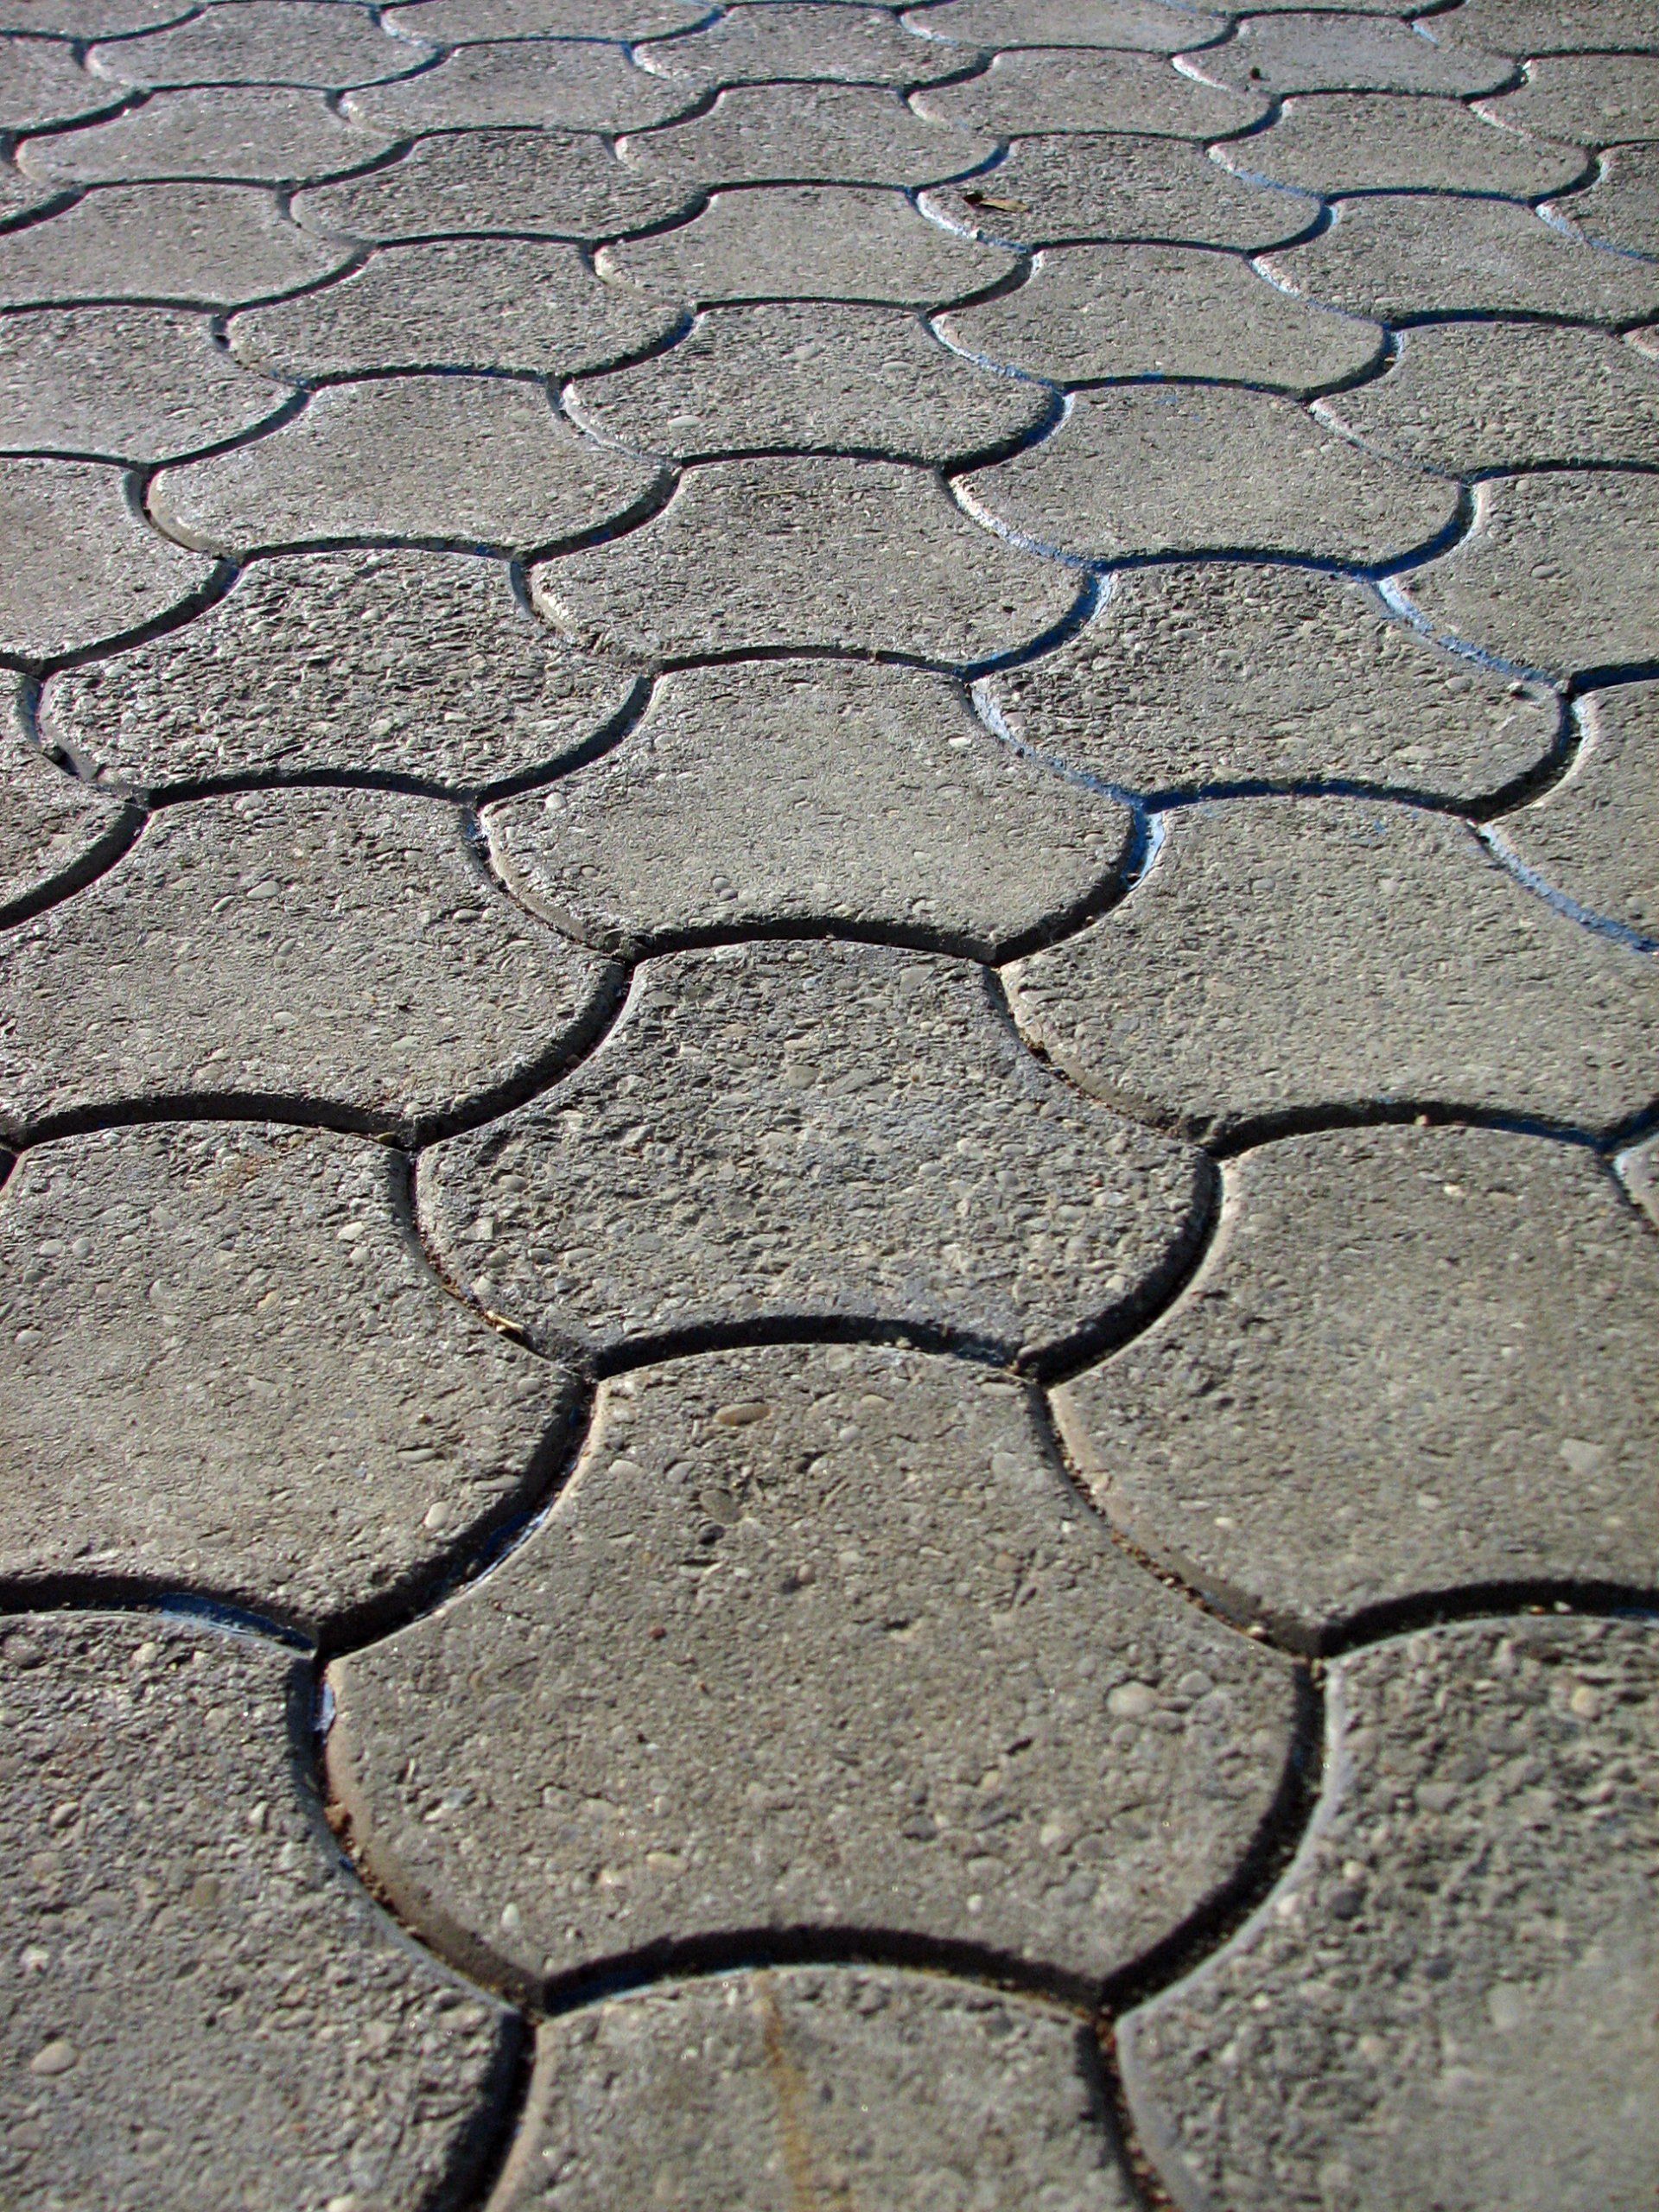 Mortar Matching — Abstract Hexagonal Road Pavement  in Ocean City, NJ